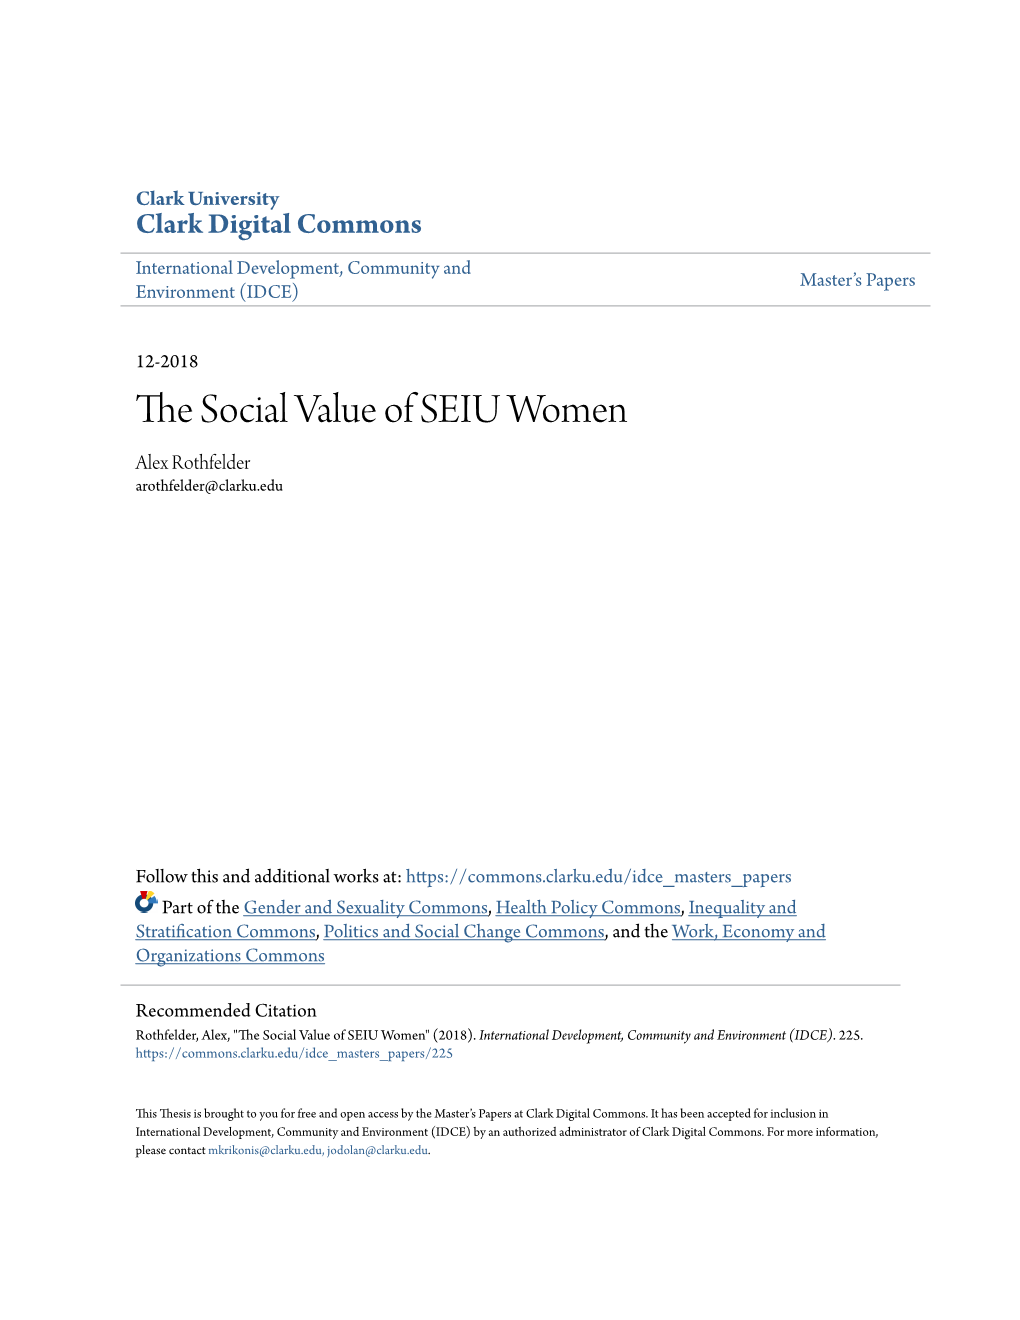 The Social Value of SEIU Women